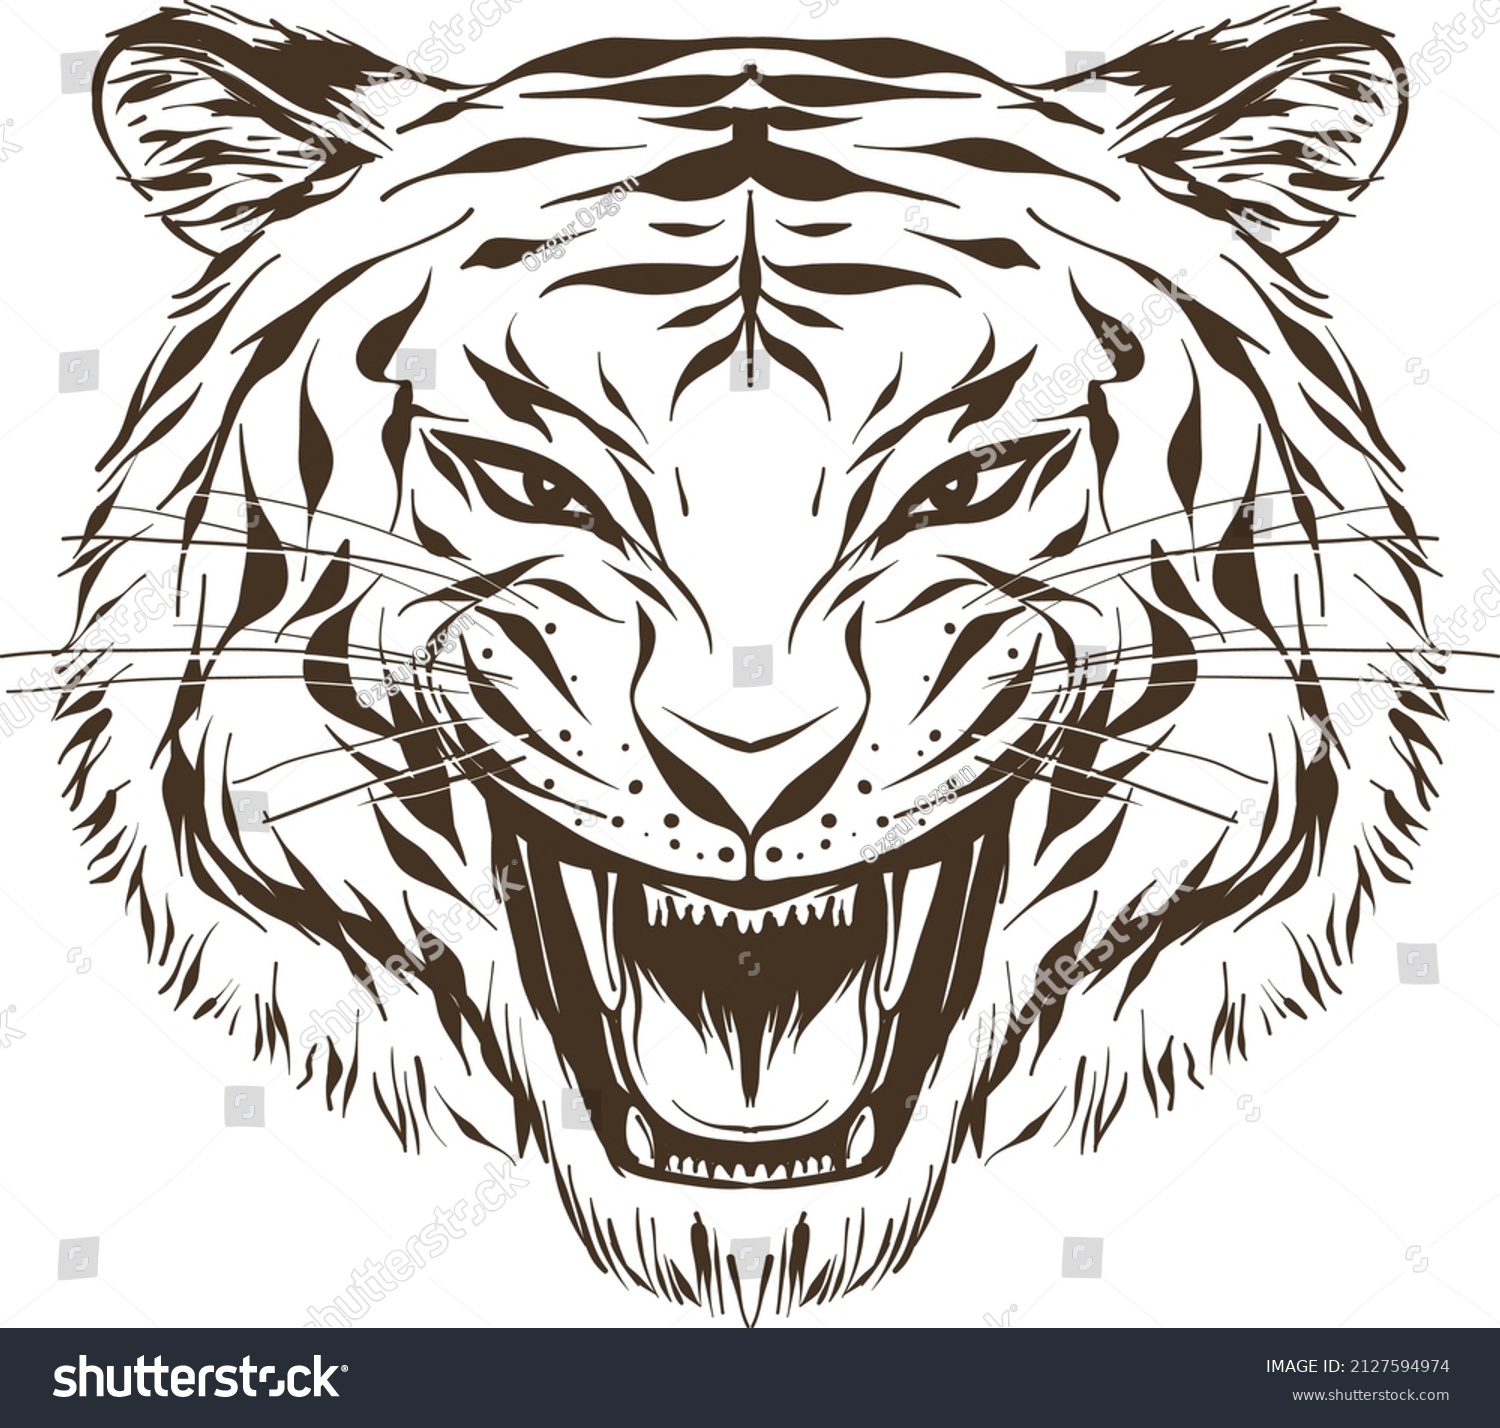 271,415 Tiger designs Images, Stock Photos & Vectors | Shutterstock